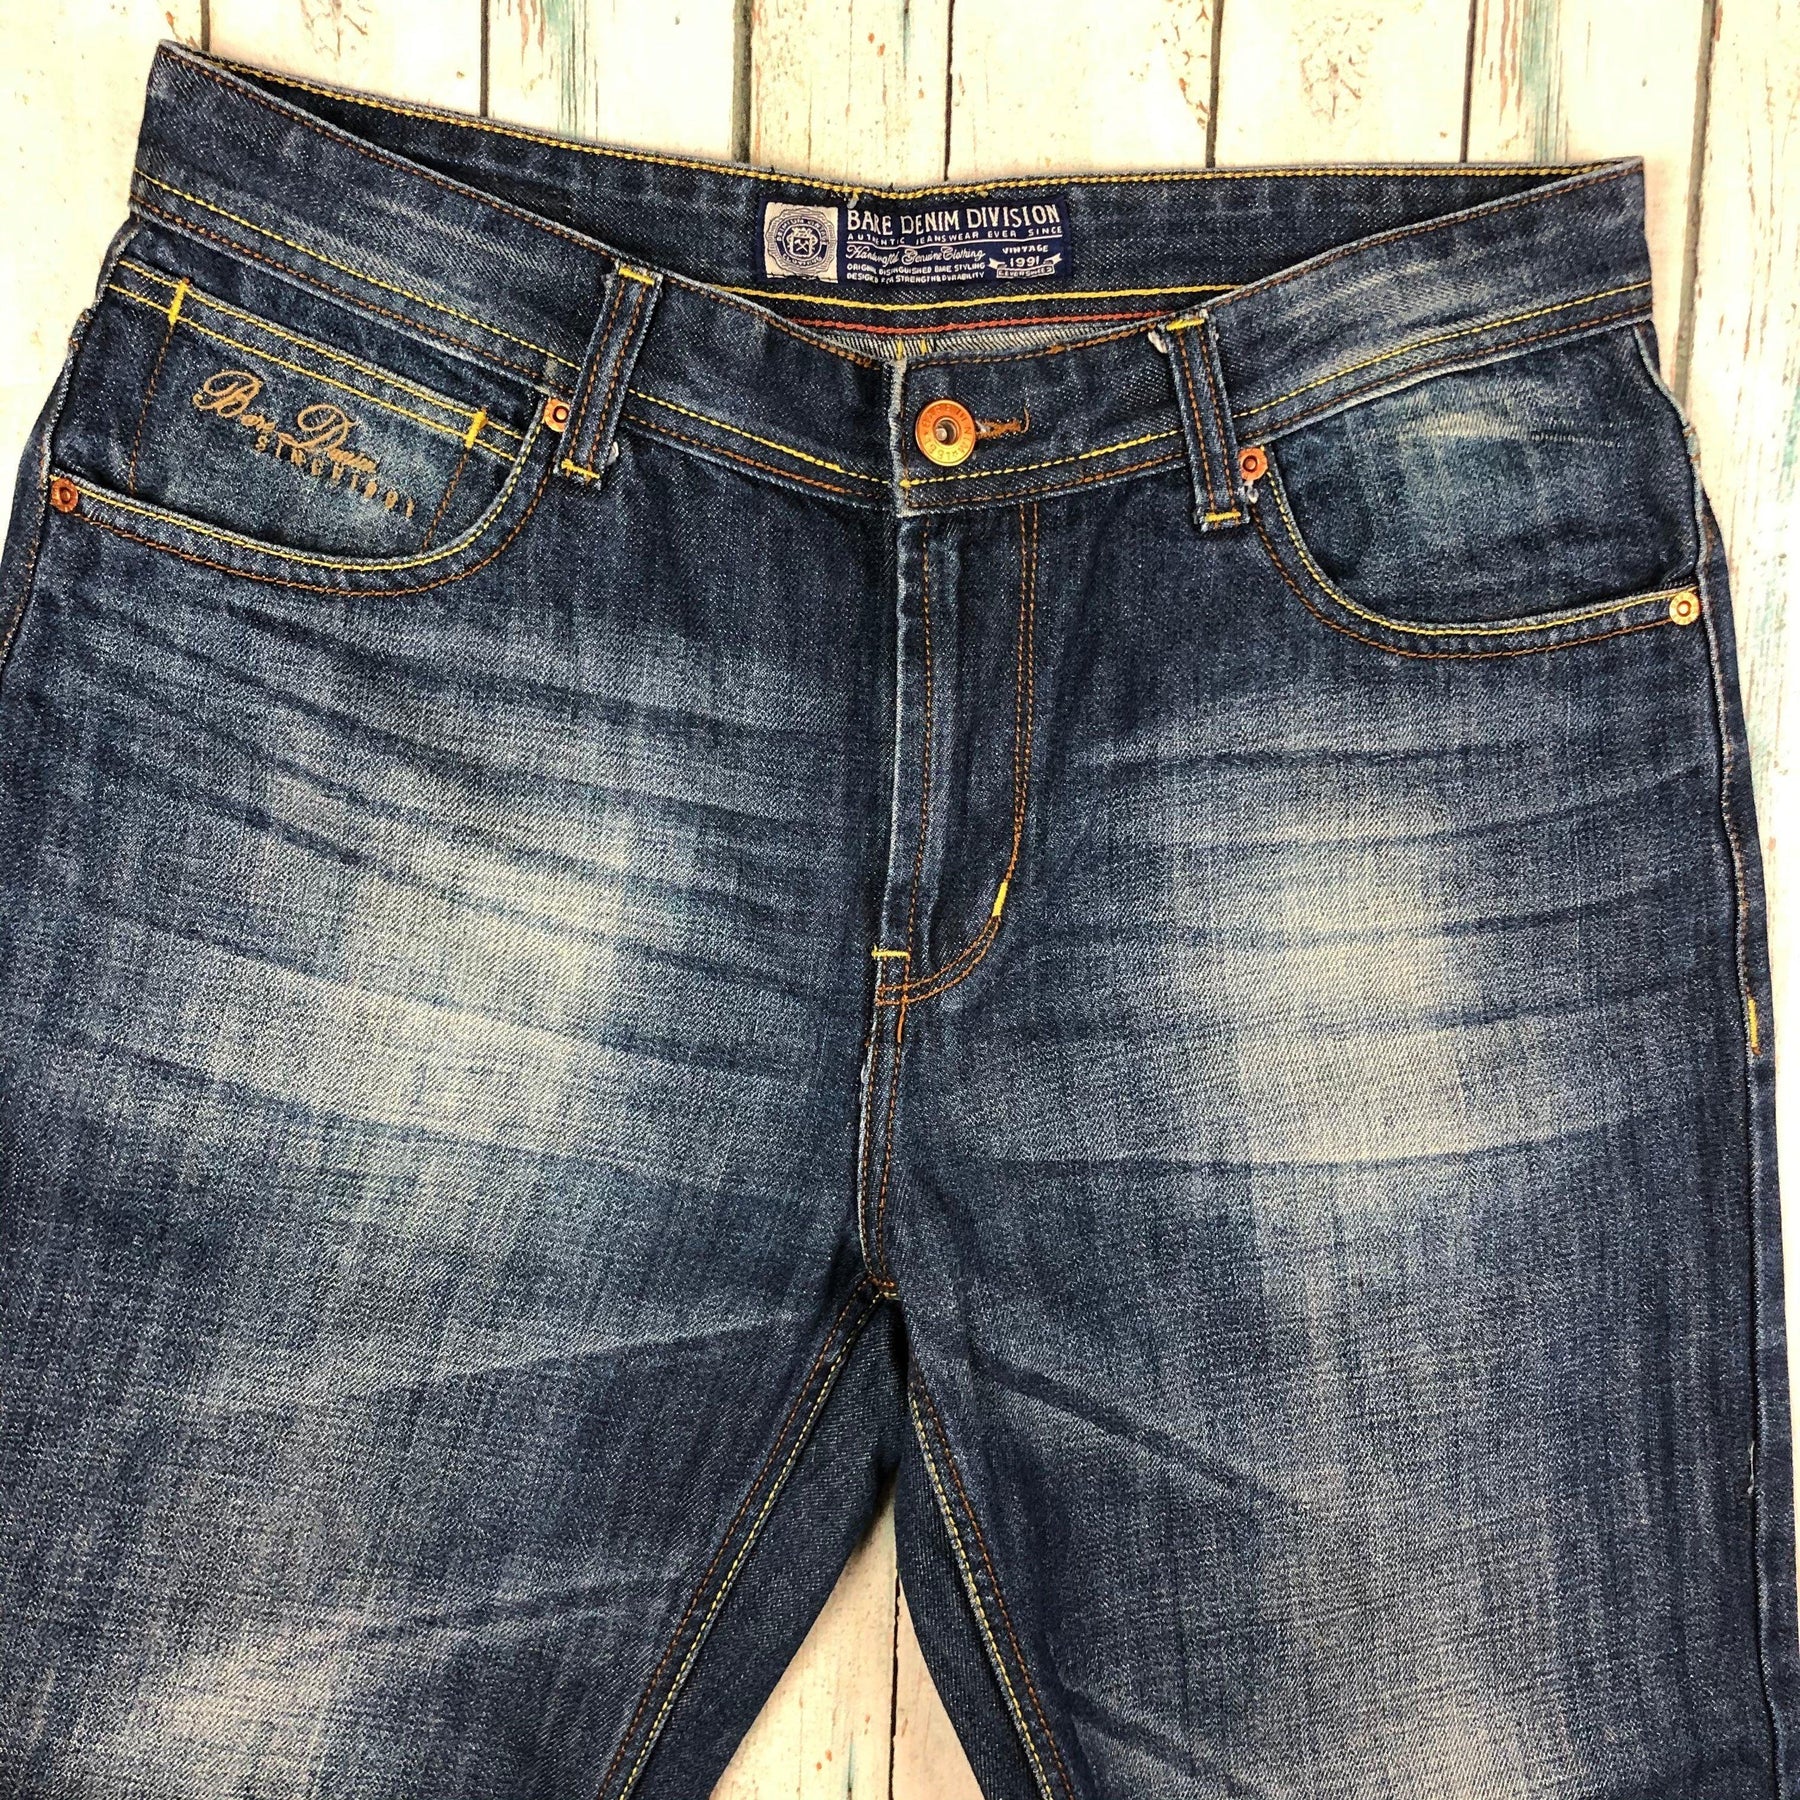 Jeans & Pants | Bare Denim Branded Jeans For Men (A.64) | Freeup